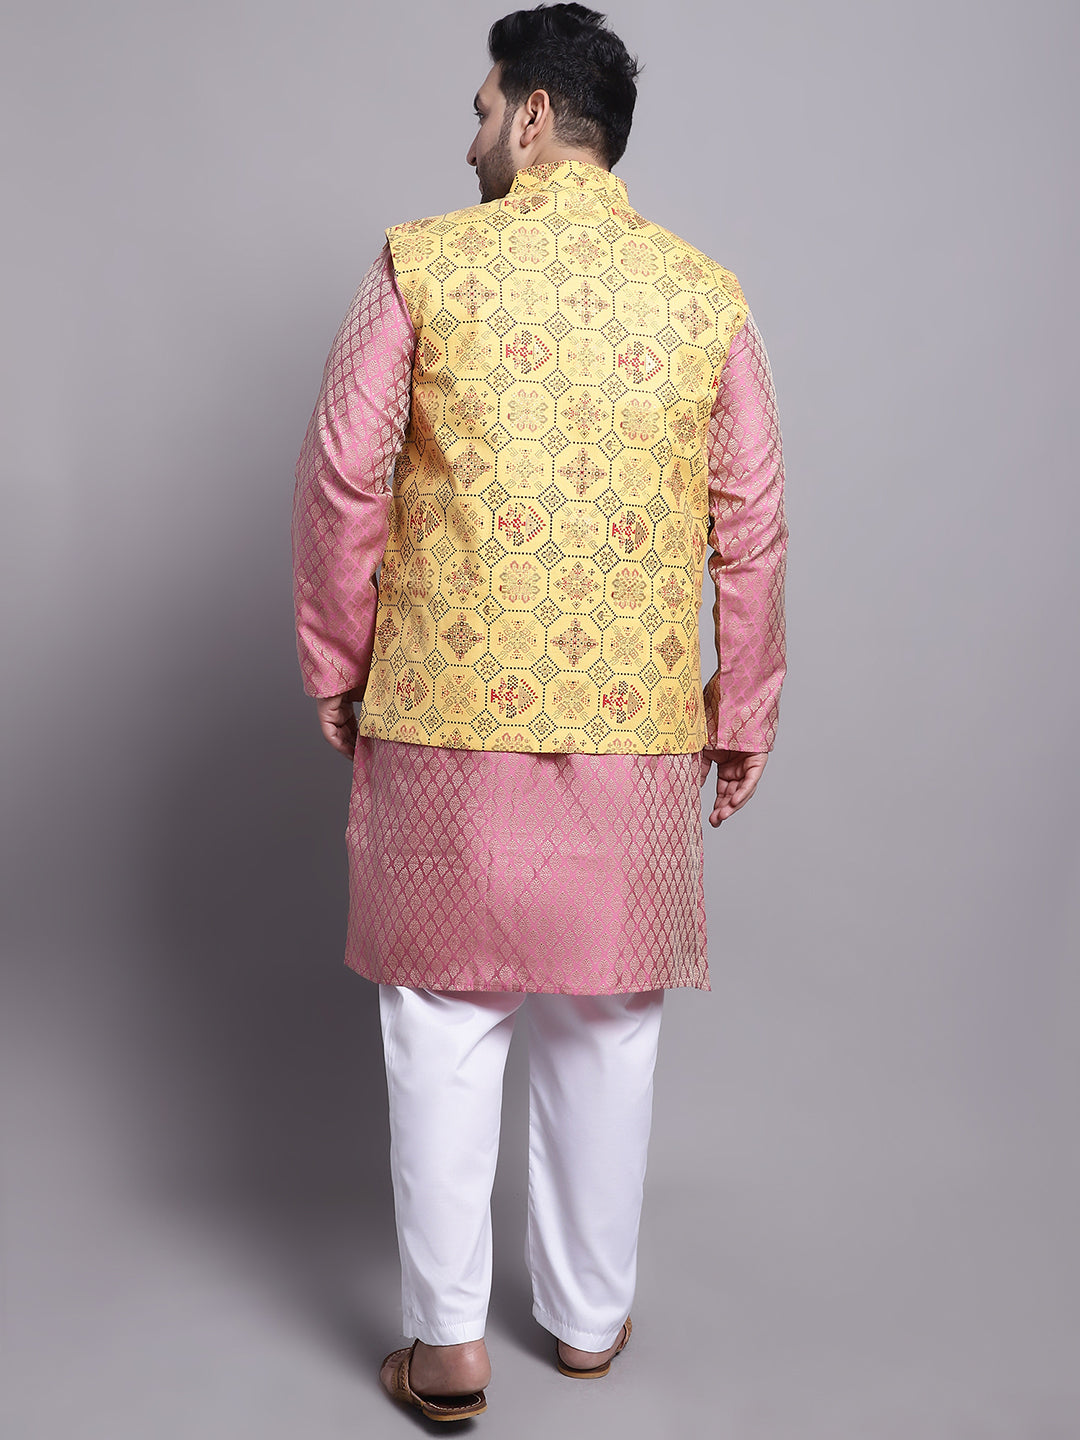 Men's Silk Blend Pink Kurta & Yellow Printed Nehrujacket With White Pyjama